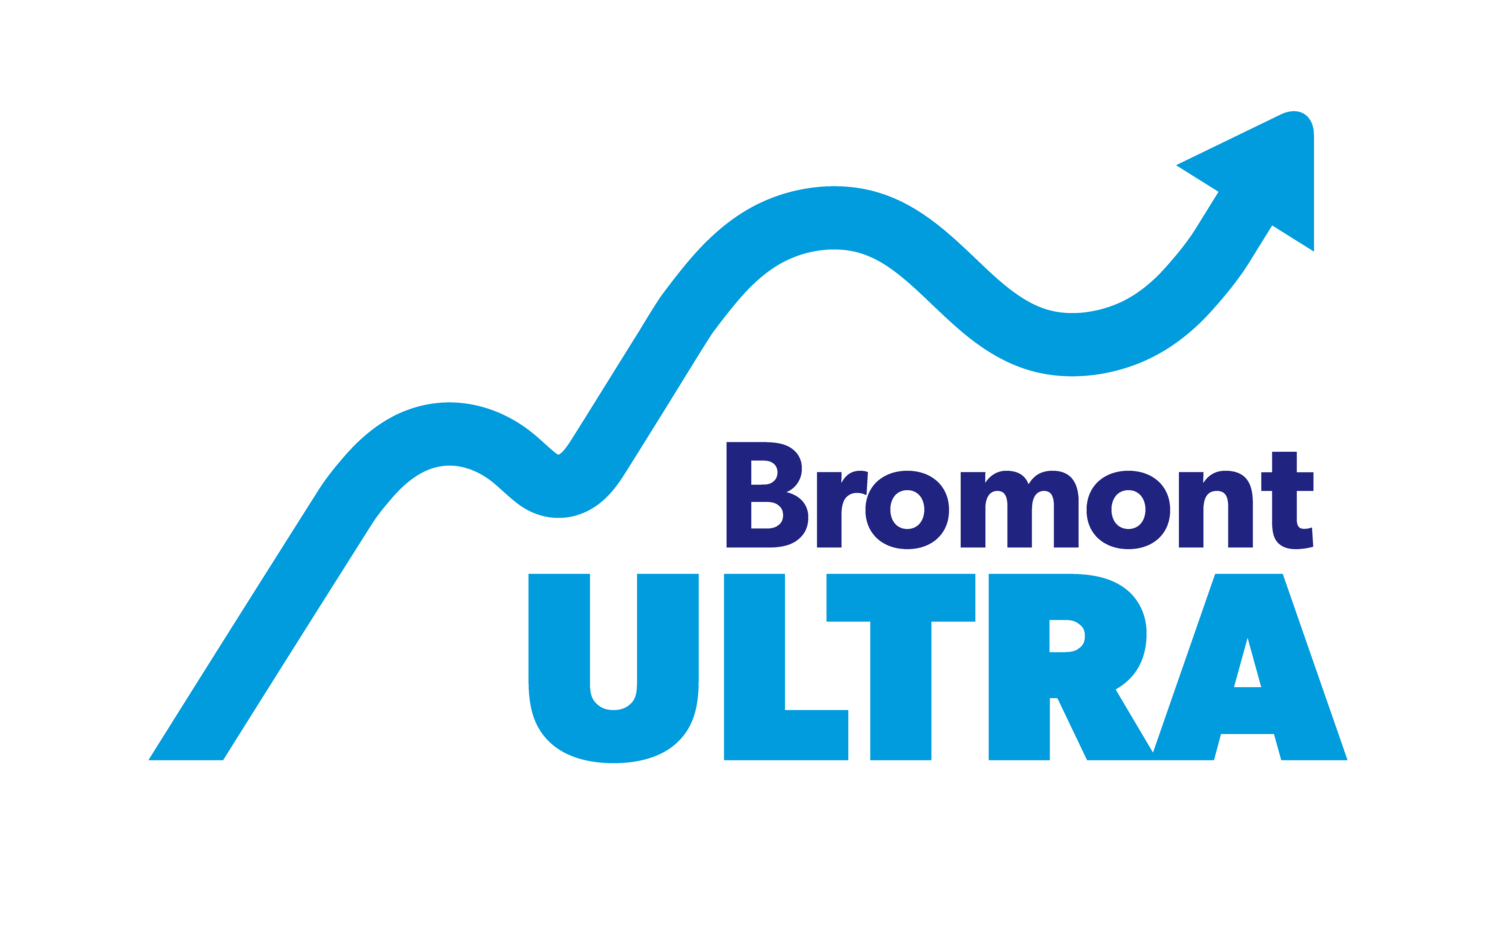 Bromont Ultra logo on RaceRaves